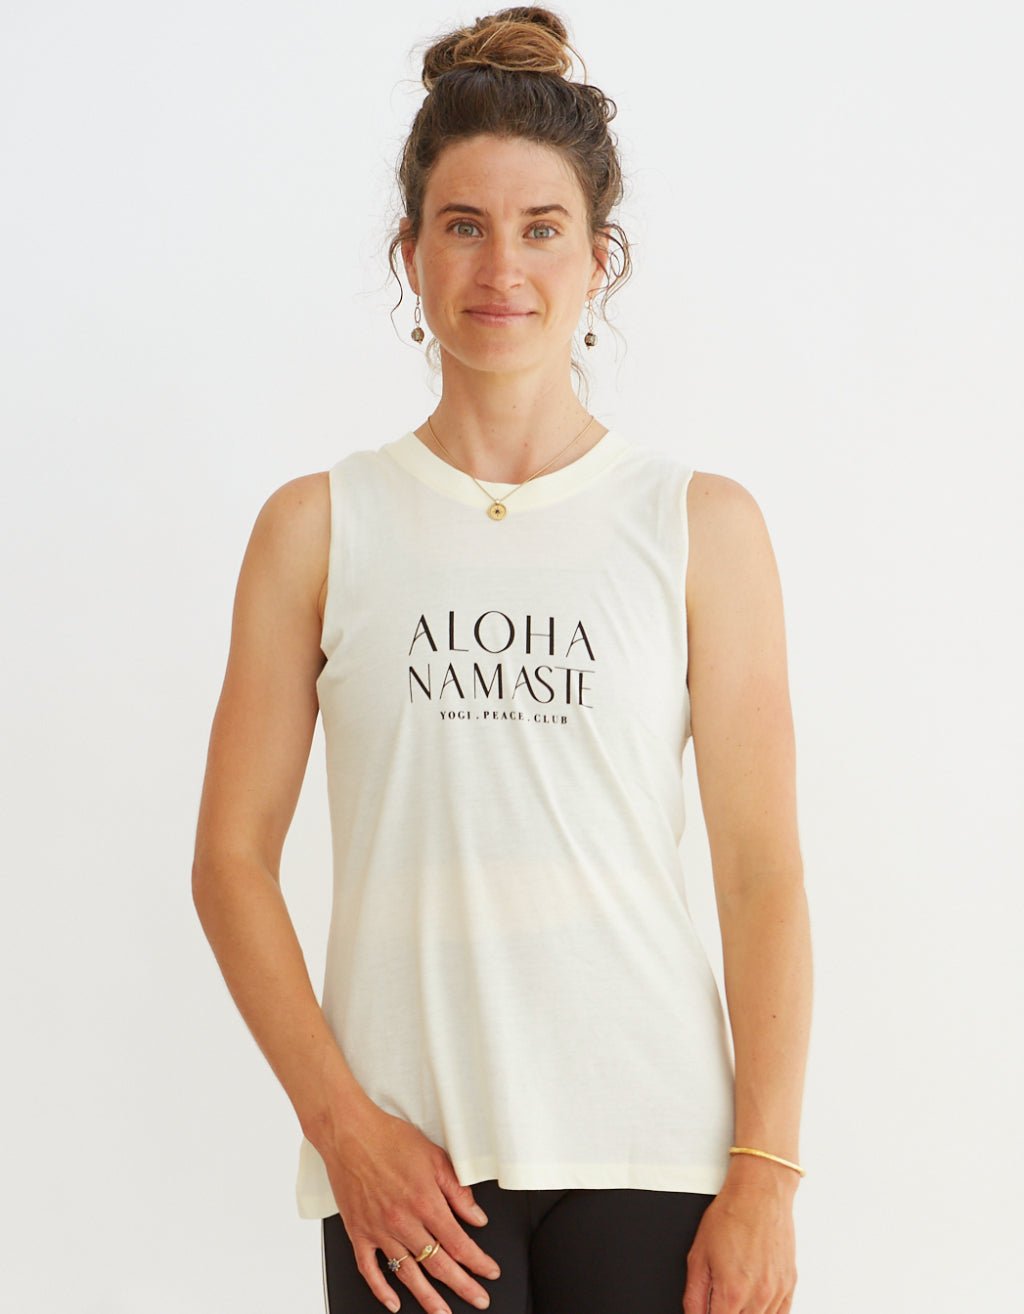 Aloha Namaste Yoga Tank - Yogi Peace Club - Yoga Top